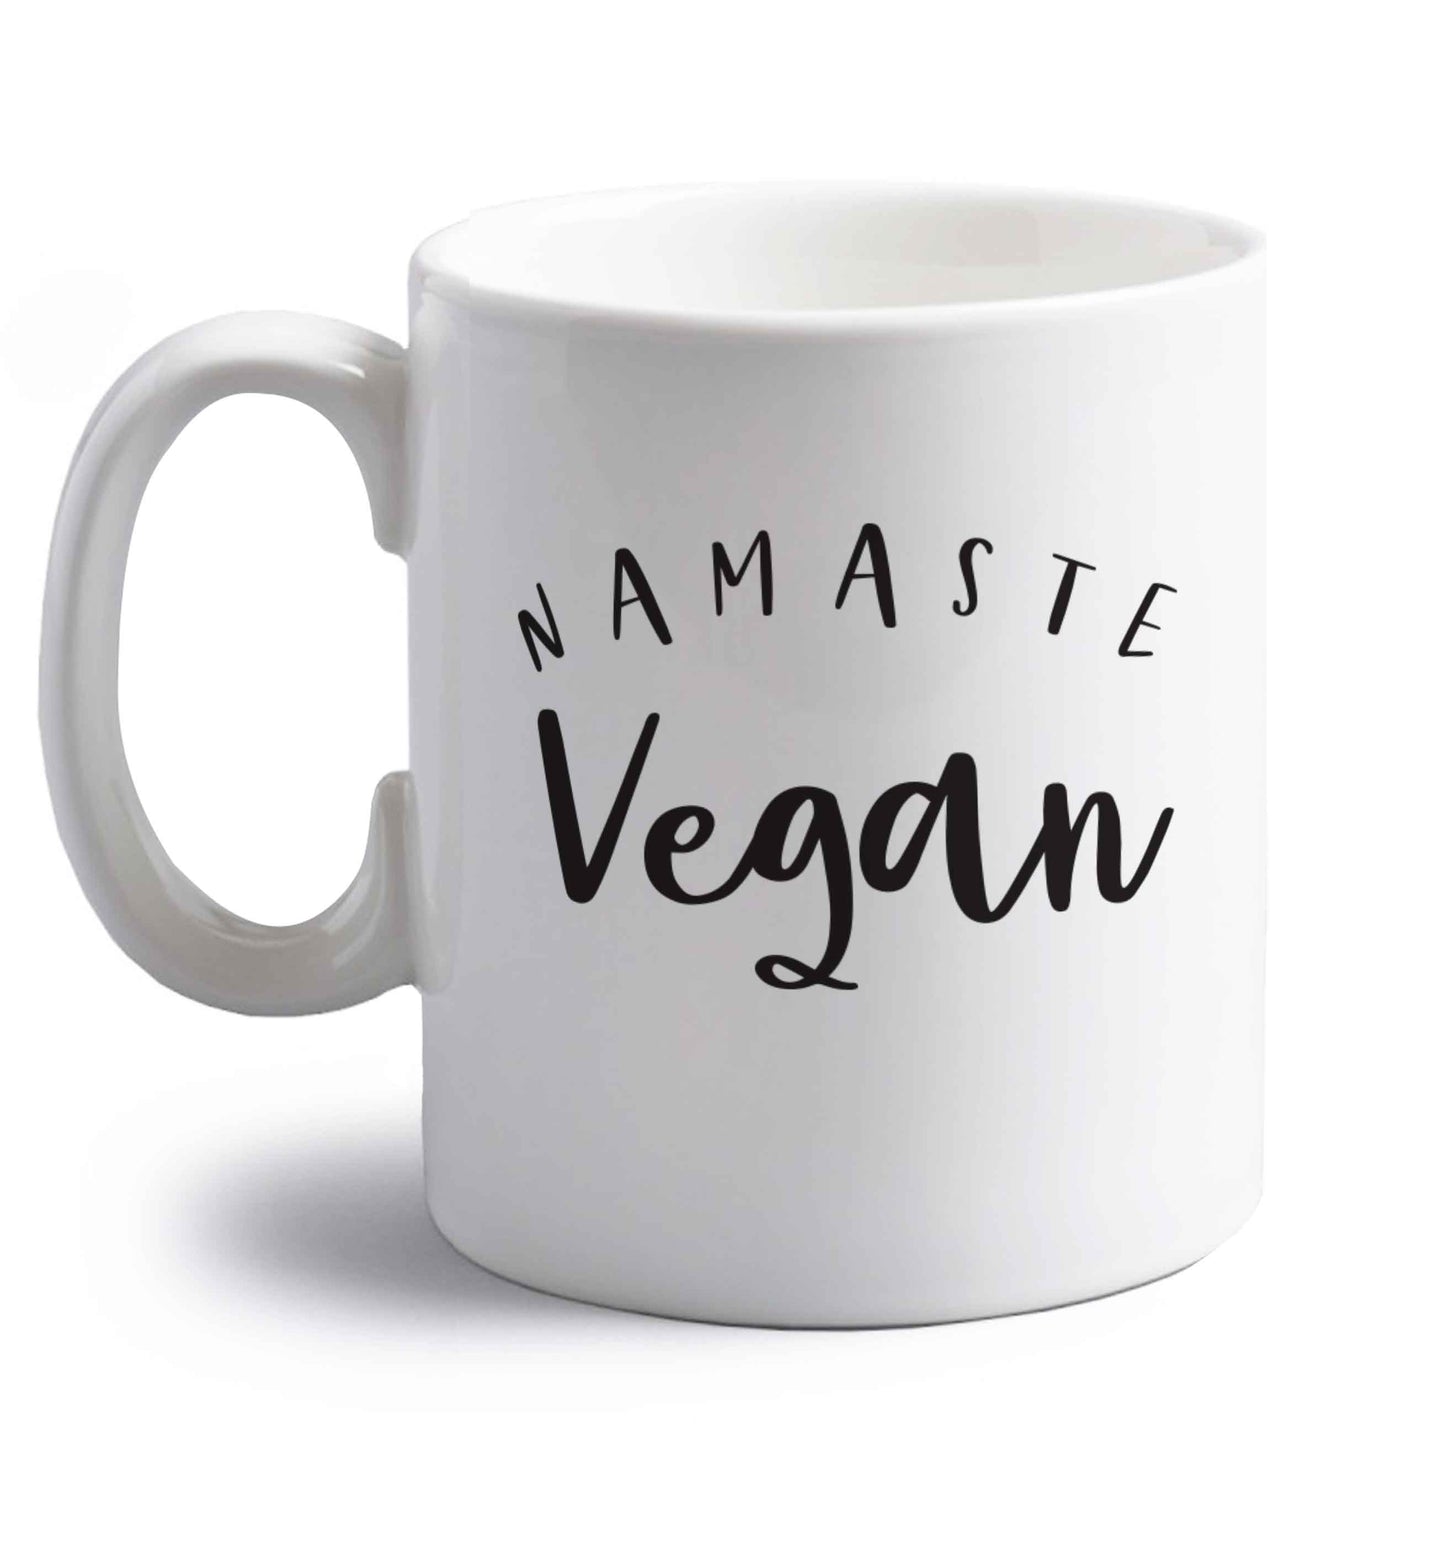 Namaste vegan right handed white ceramic mug 